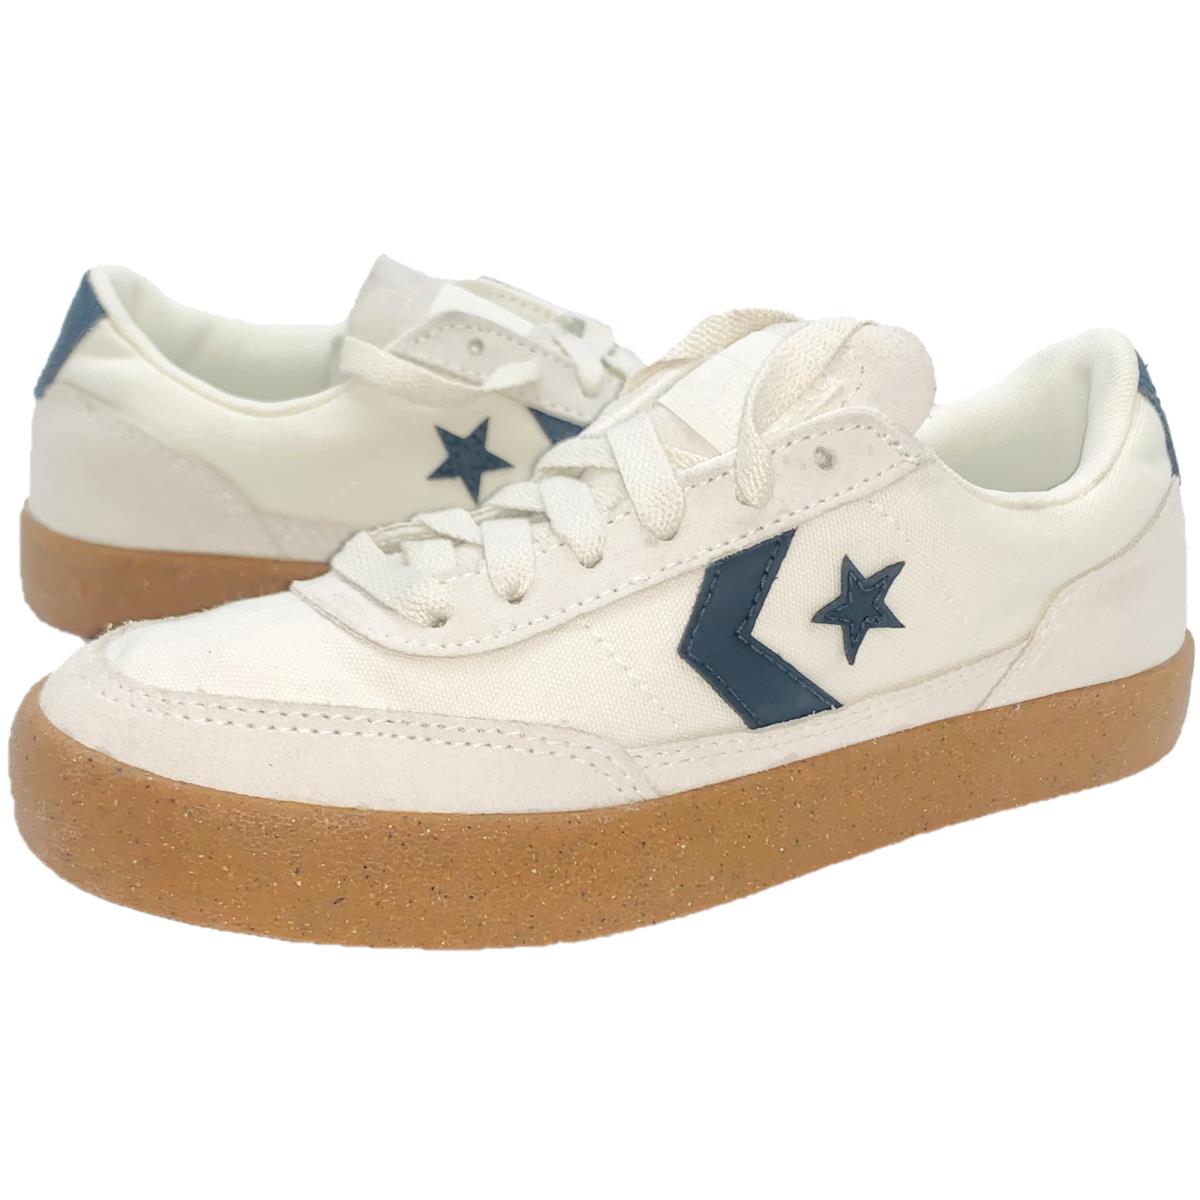 Converse Net Star Classic Ox Gum Tape Honey Trainers Sneaker Shoe Size M4/W5.5